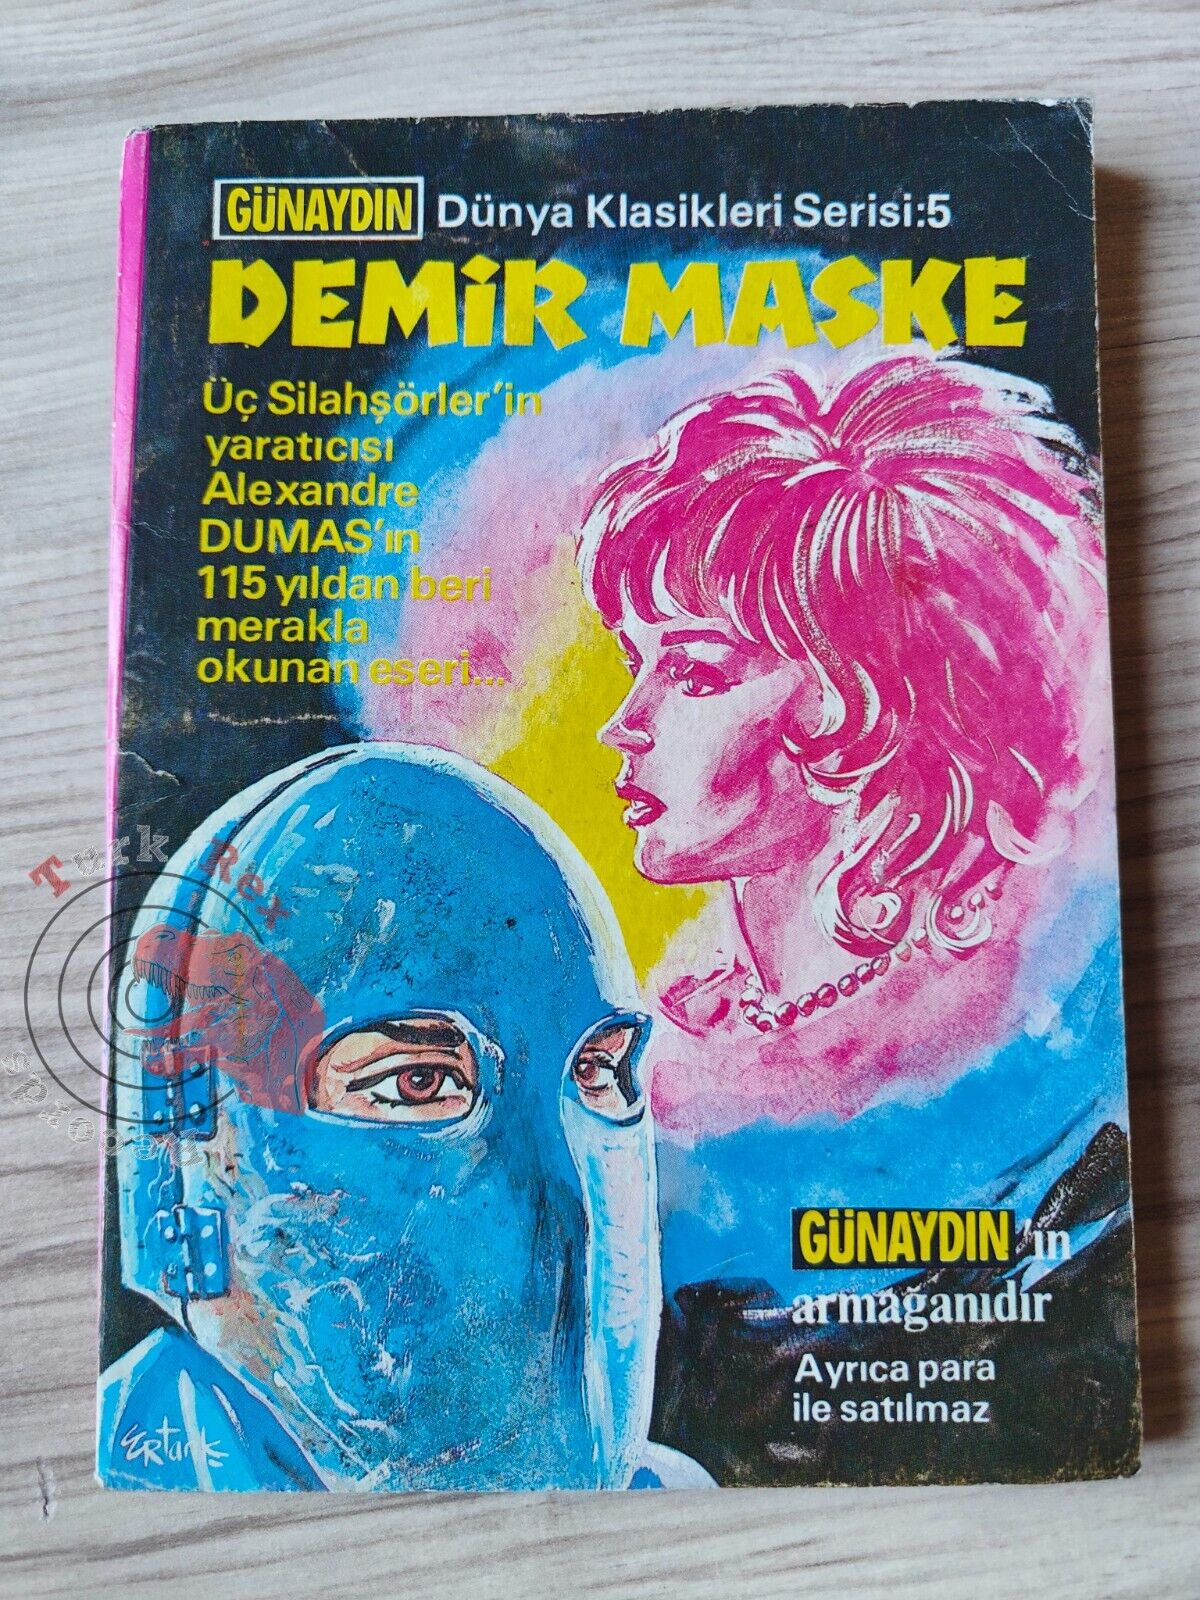 IRON MASK - Alexander Dumas  classics illustrated TURKISH RARE TURKEY COMIC